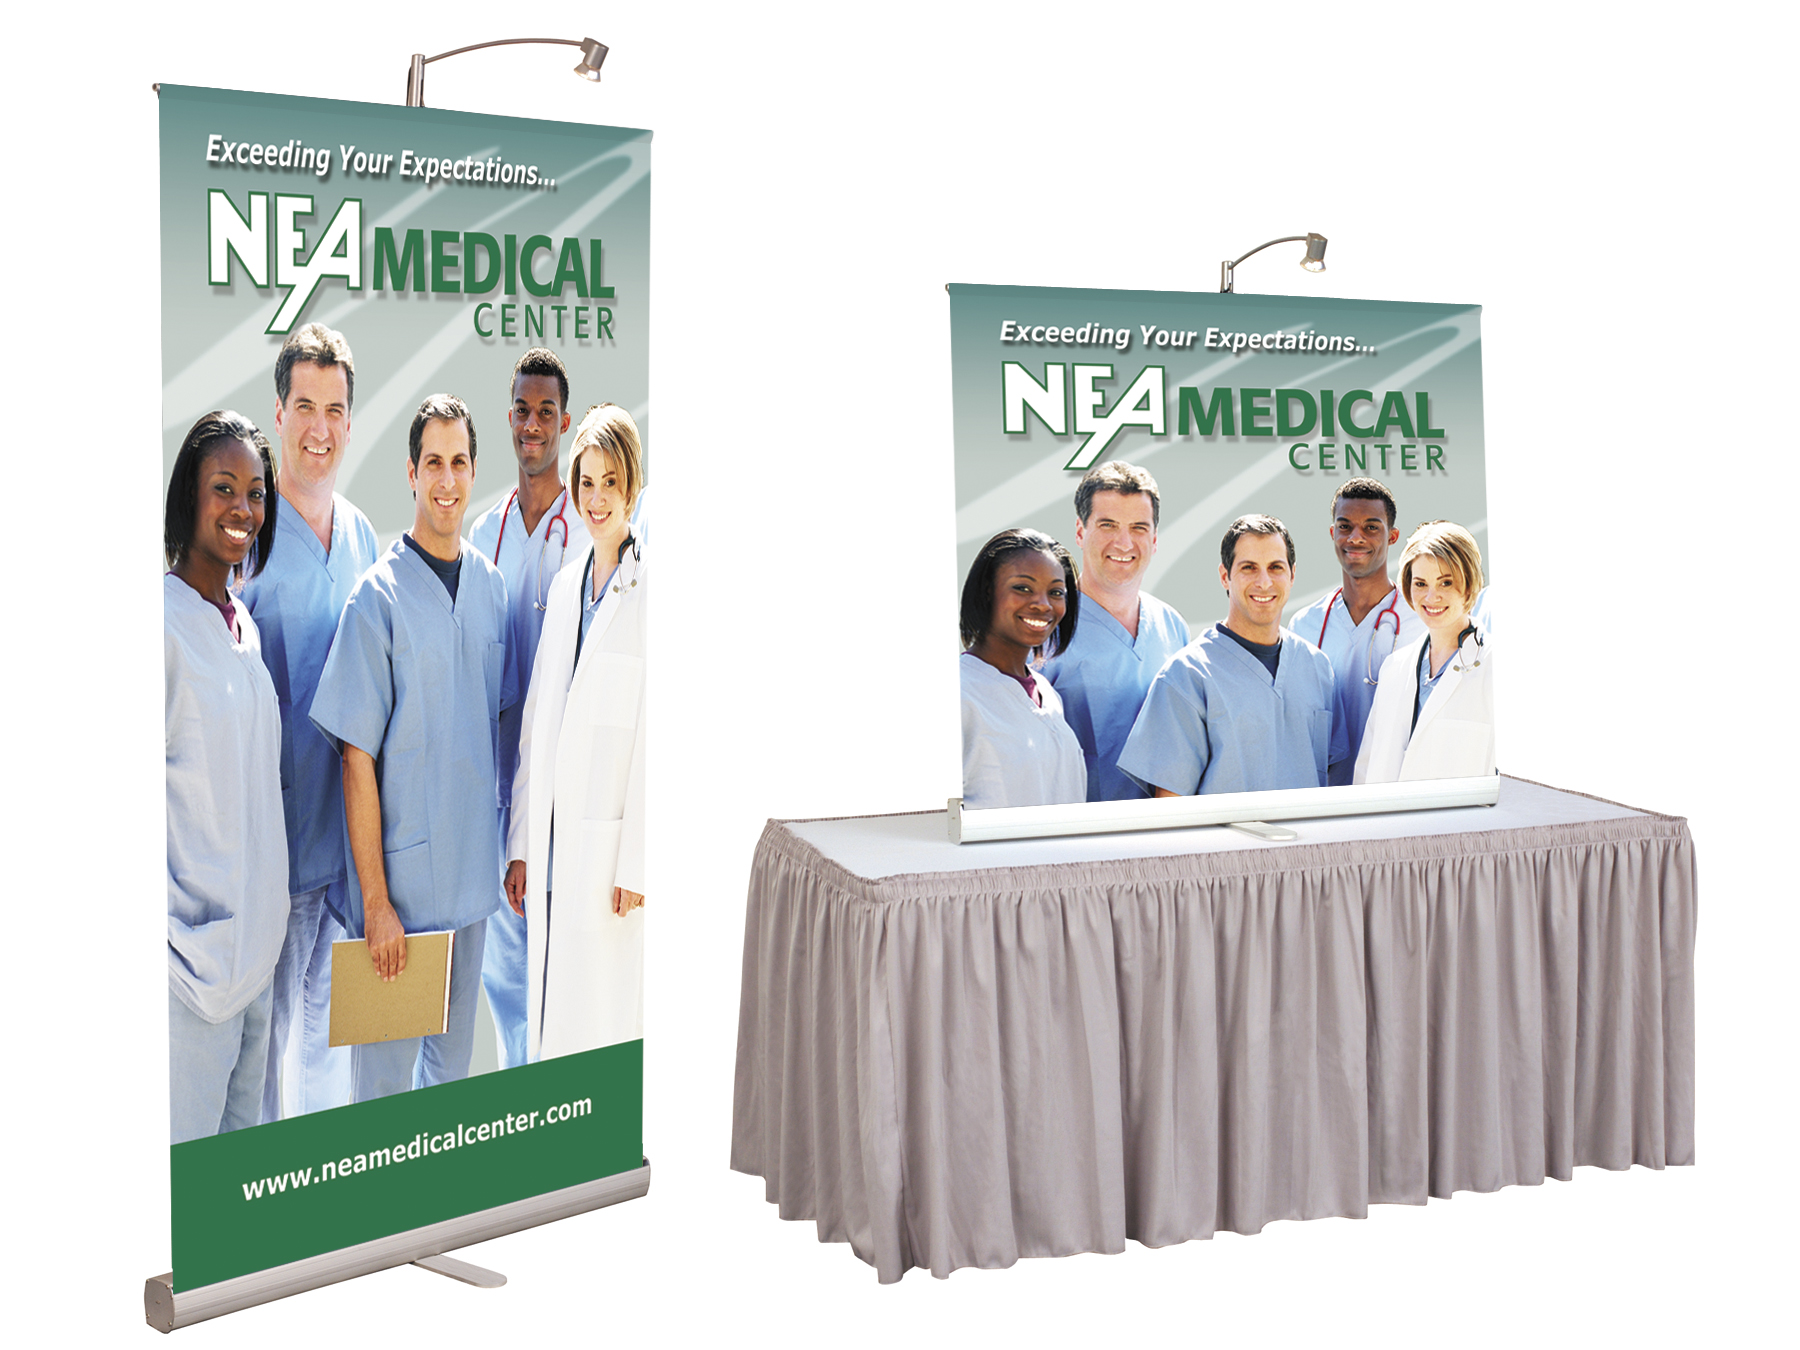 NEA Medical